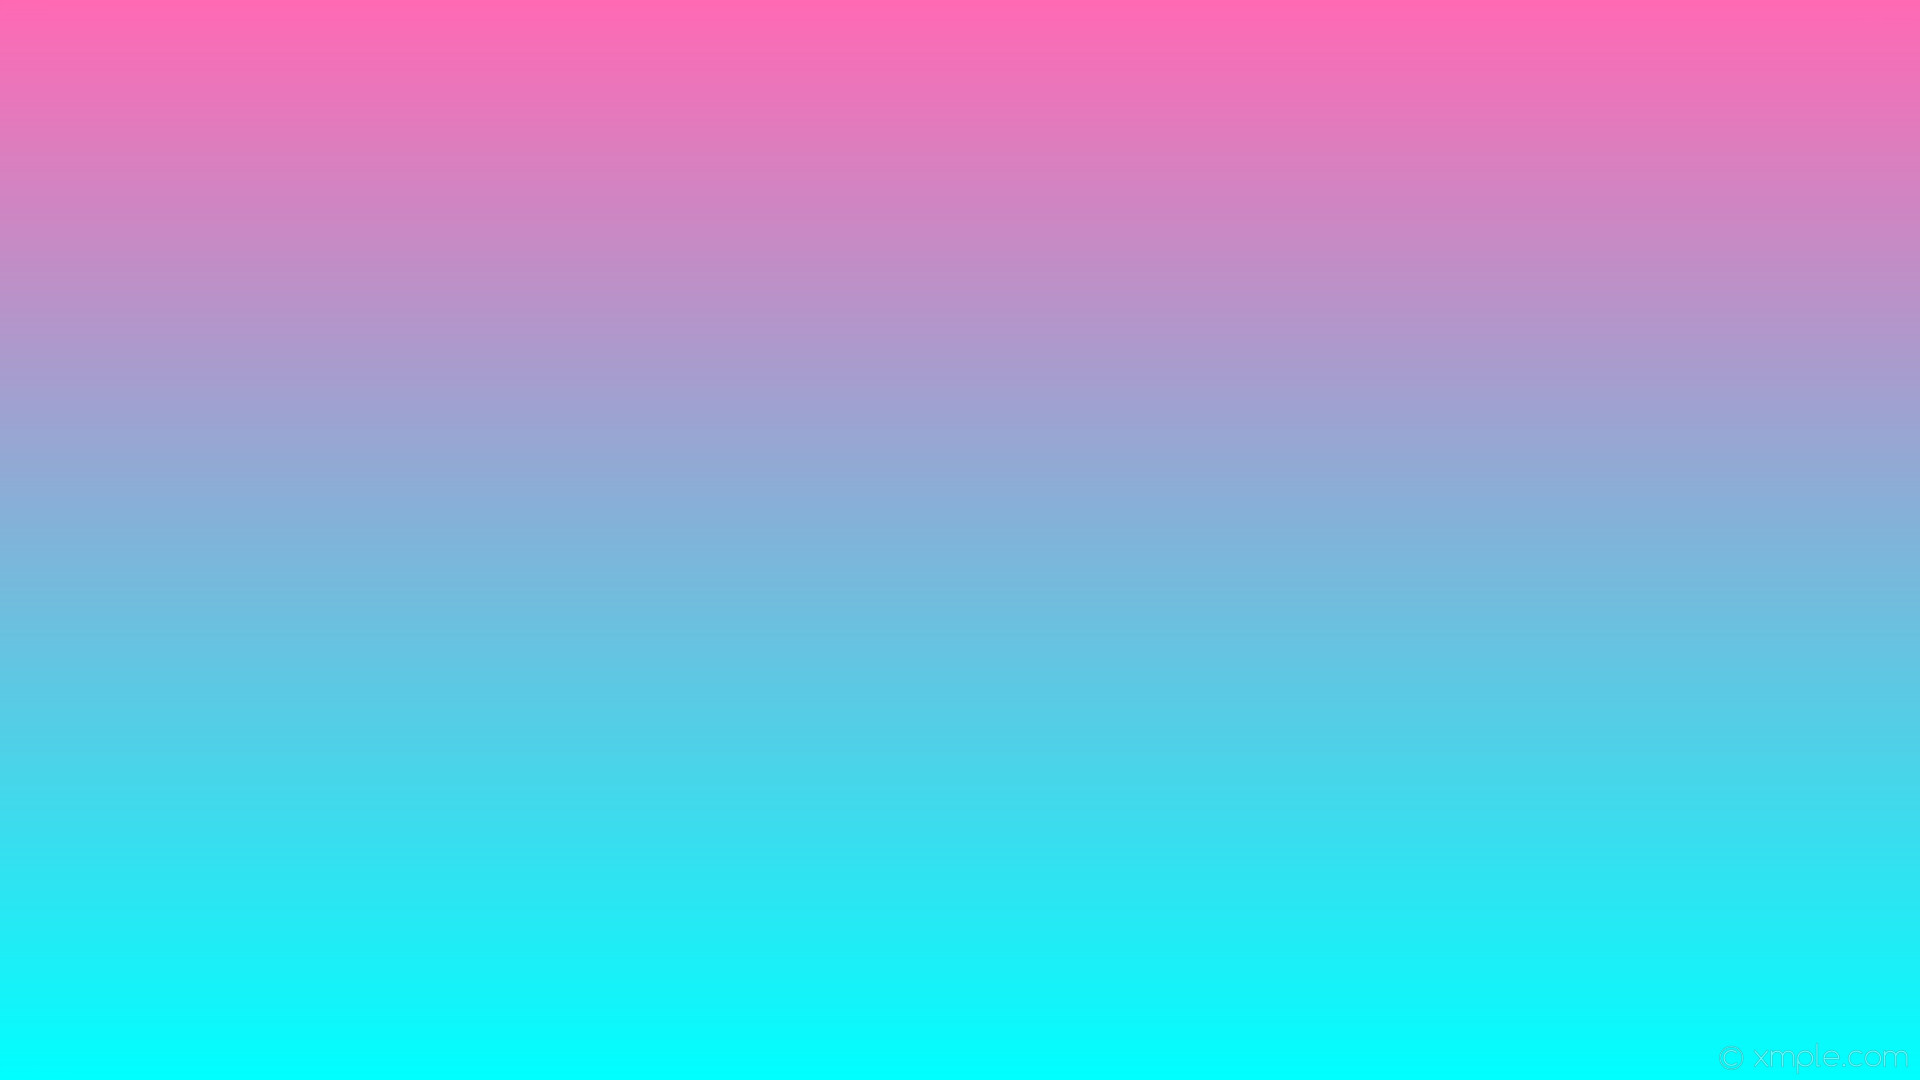 Wallpaper Blue Pink Gradient Linear Hot Pink Aqua Cyan And Hot Pink